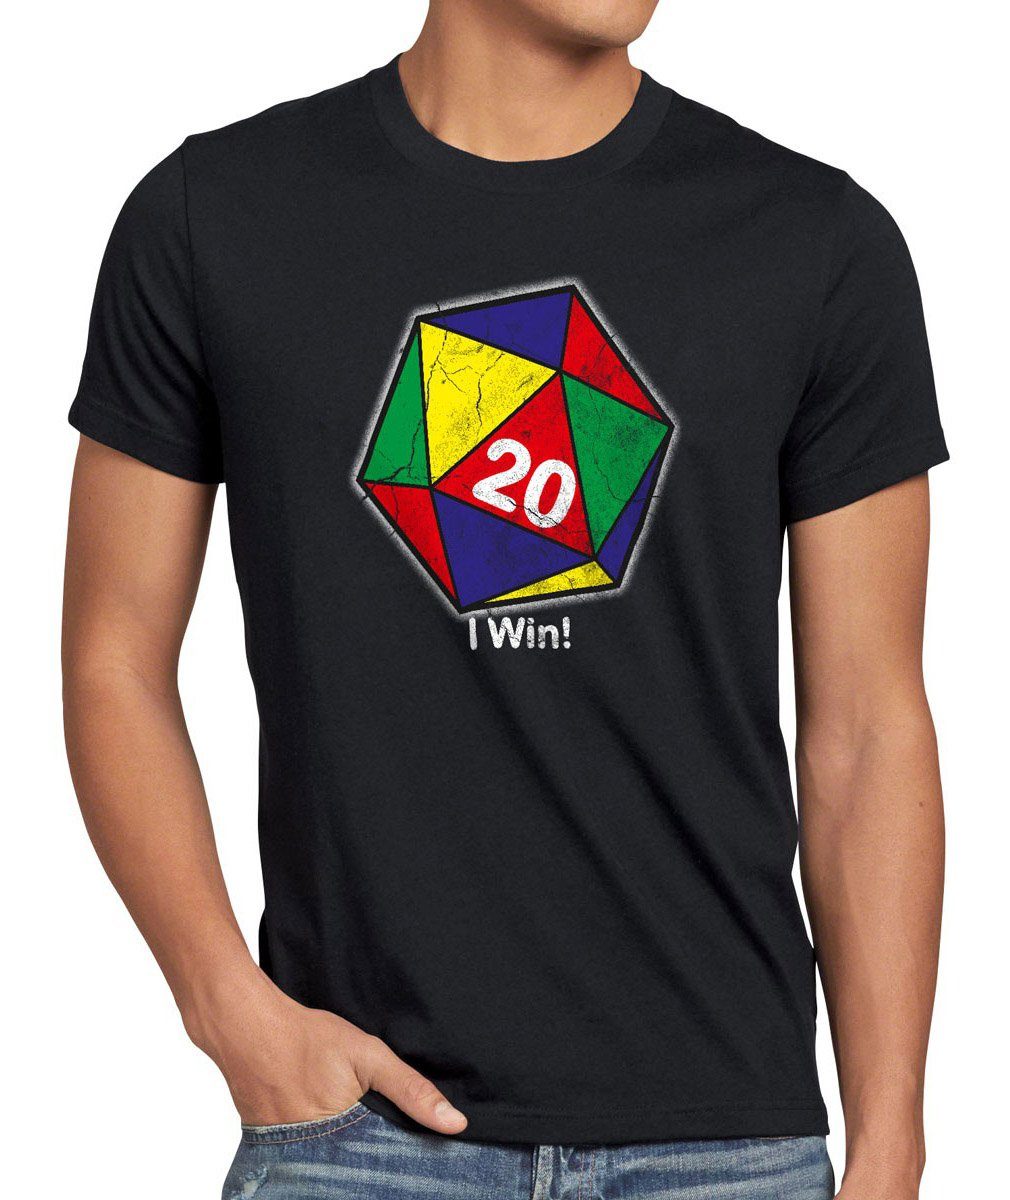 style3 Print-Shirt Herren T-Shirt Sheldon W20 Zauberwürfel big cooper theory the bang mathematik schwarz